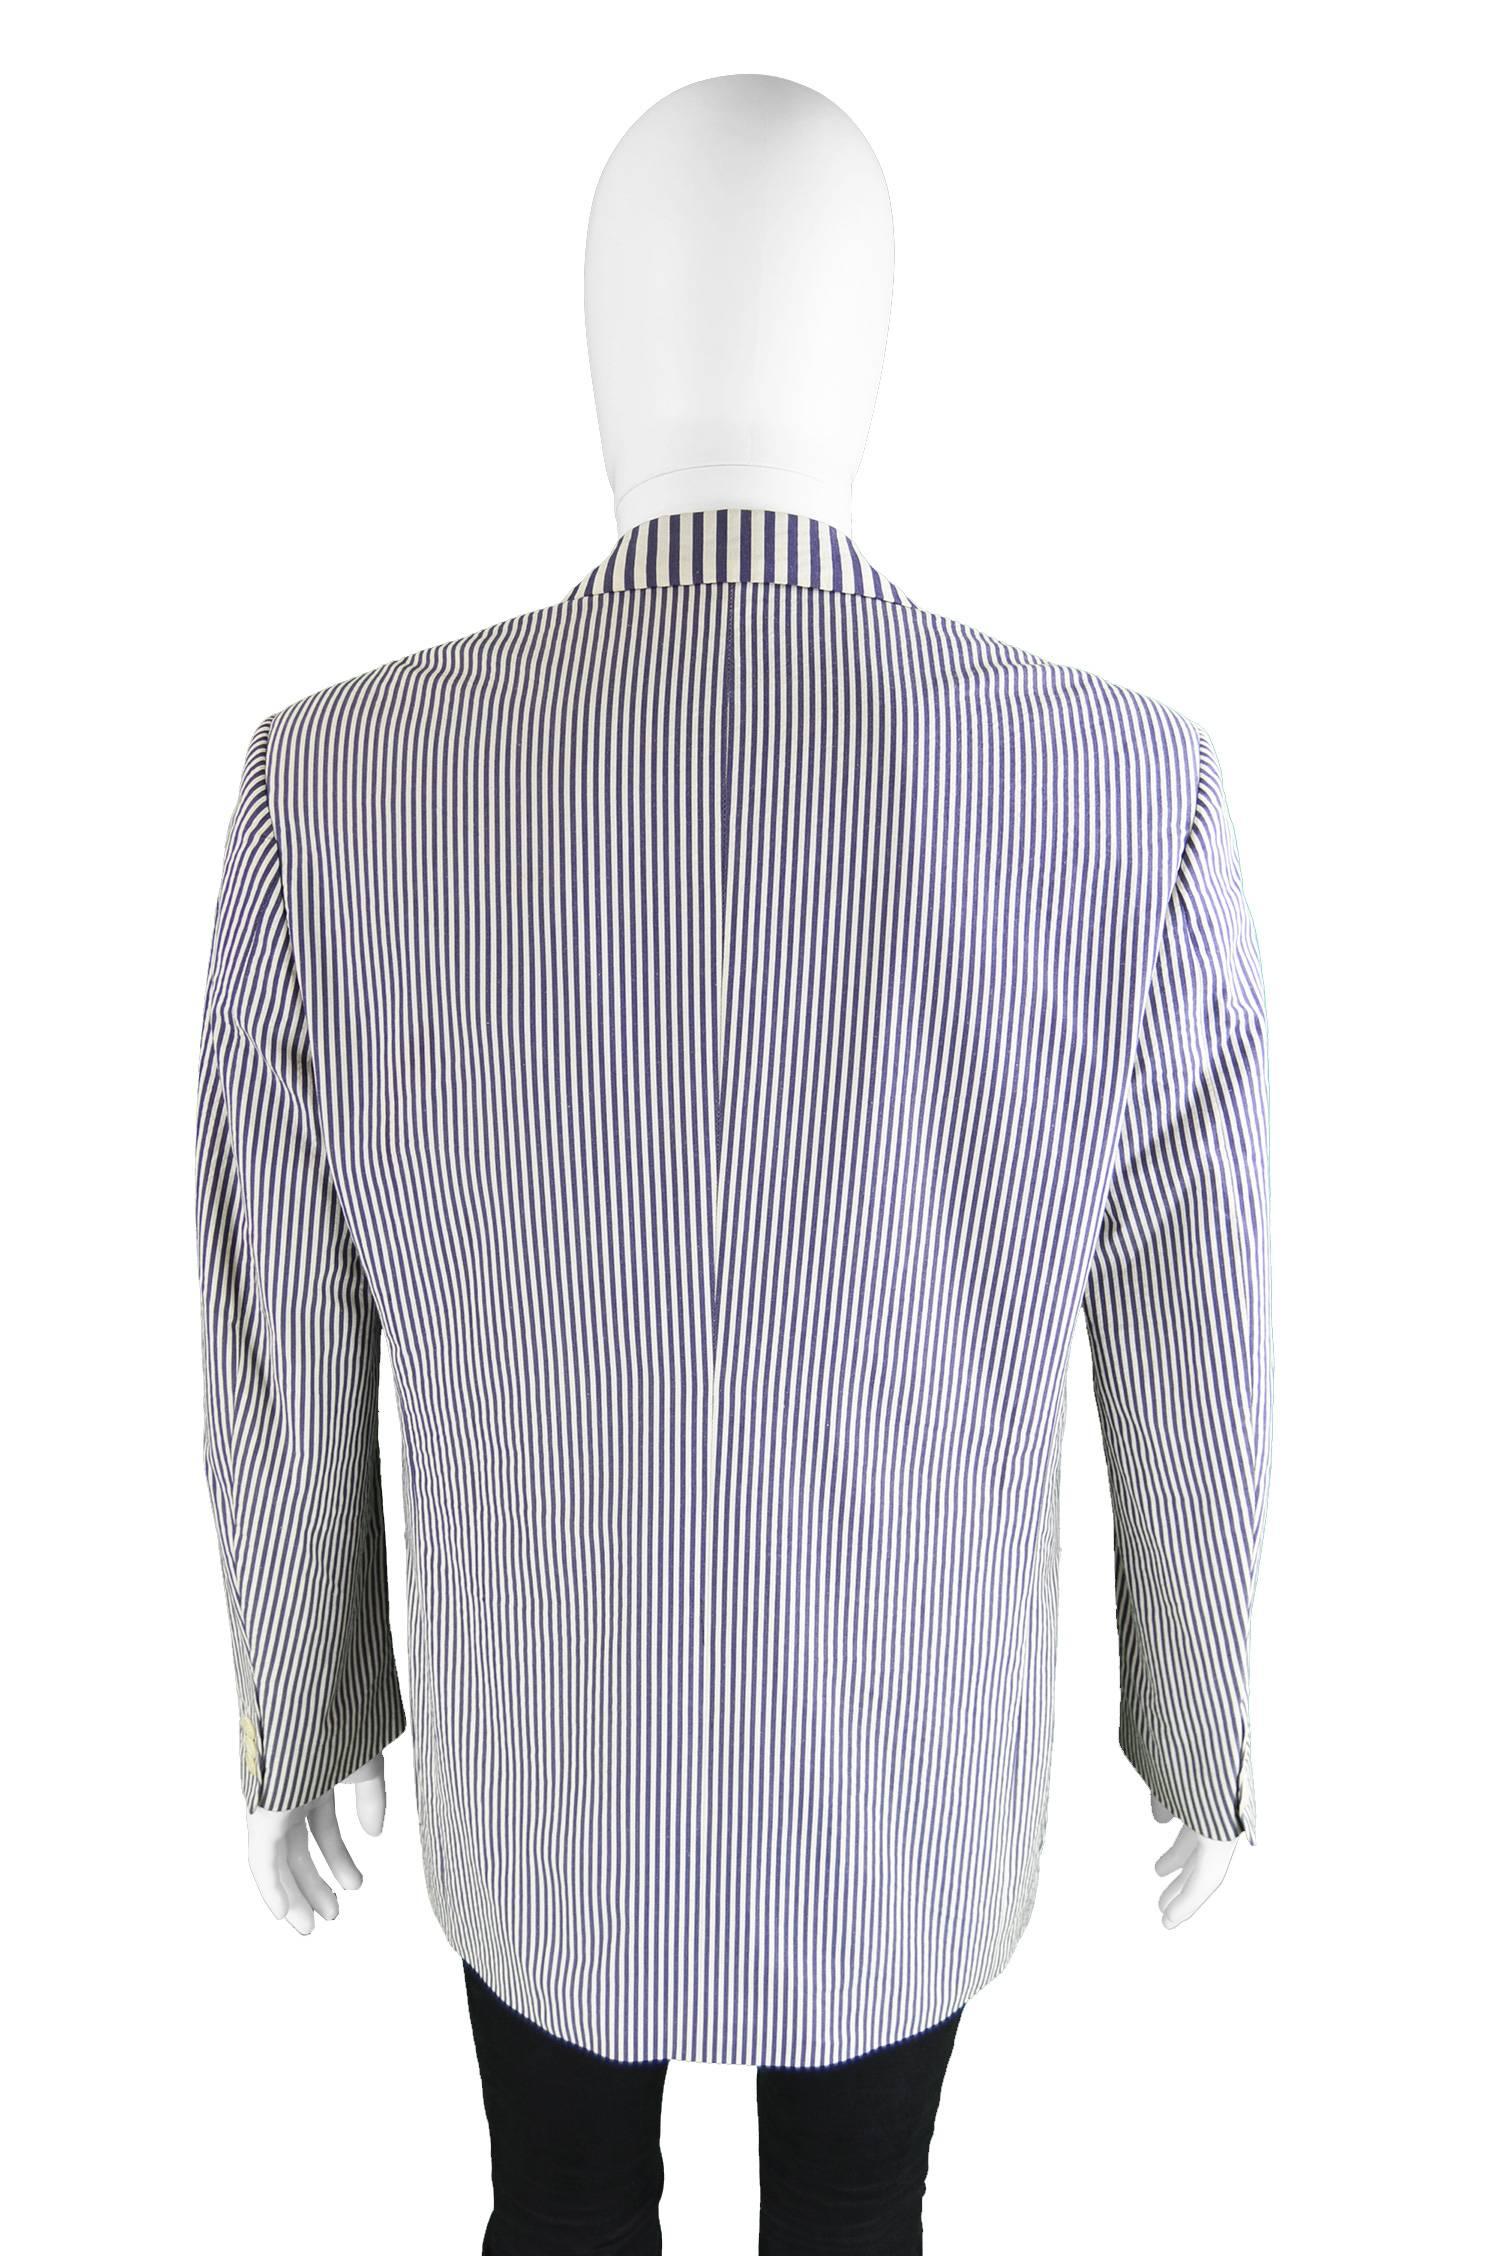 Moschino Vintage Mens Cotton Poplin Optical Illusion Striped Jacket, c. 1997 For Sale 1